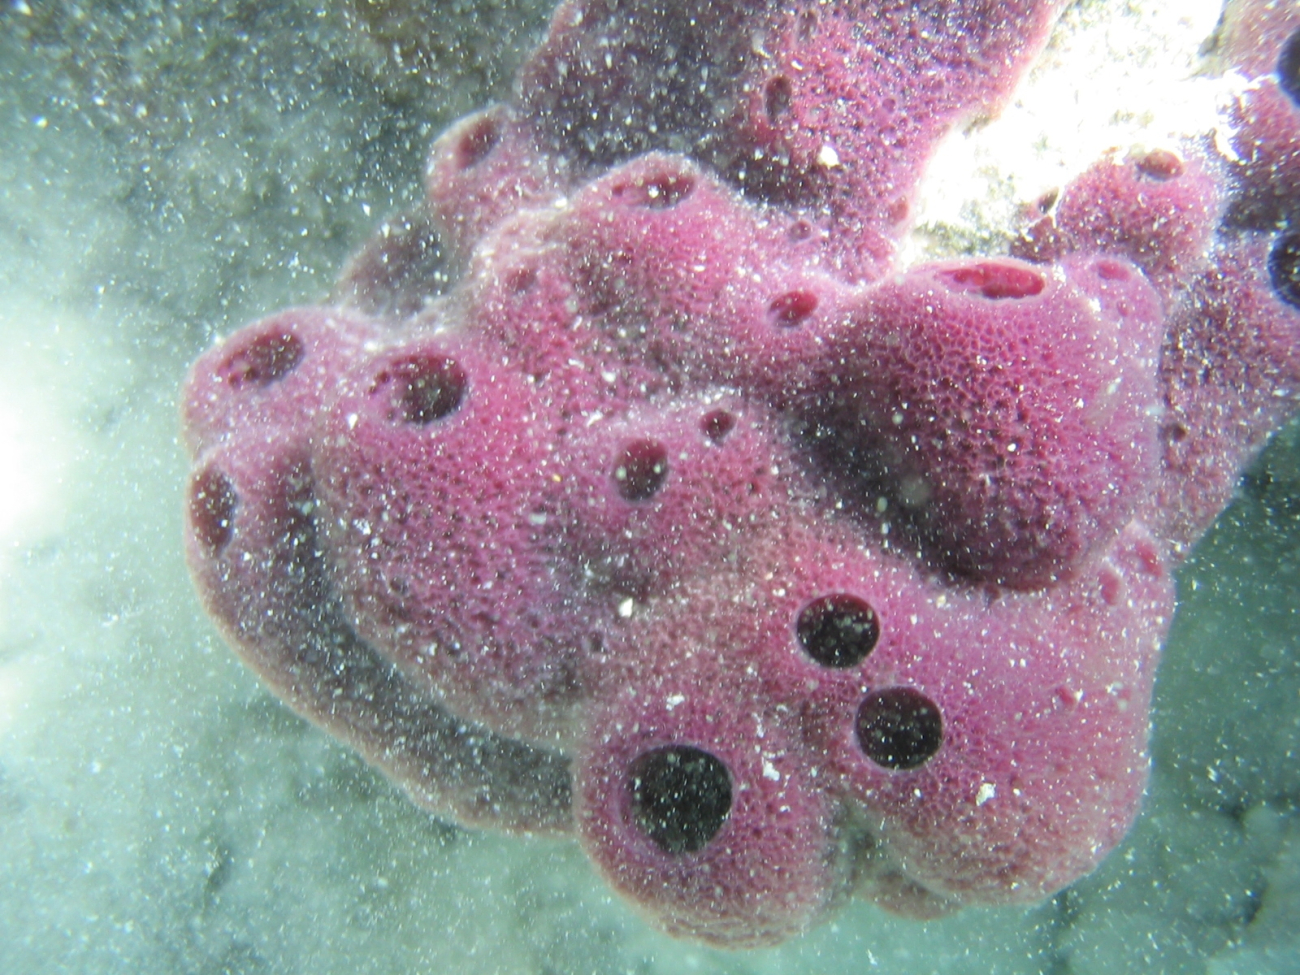 A pink sponge